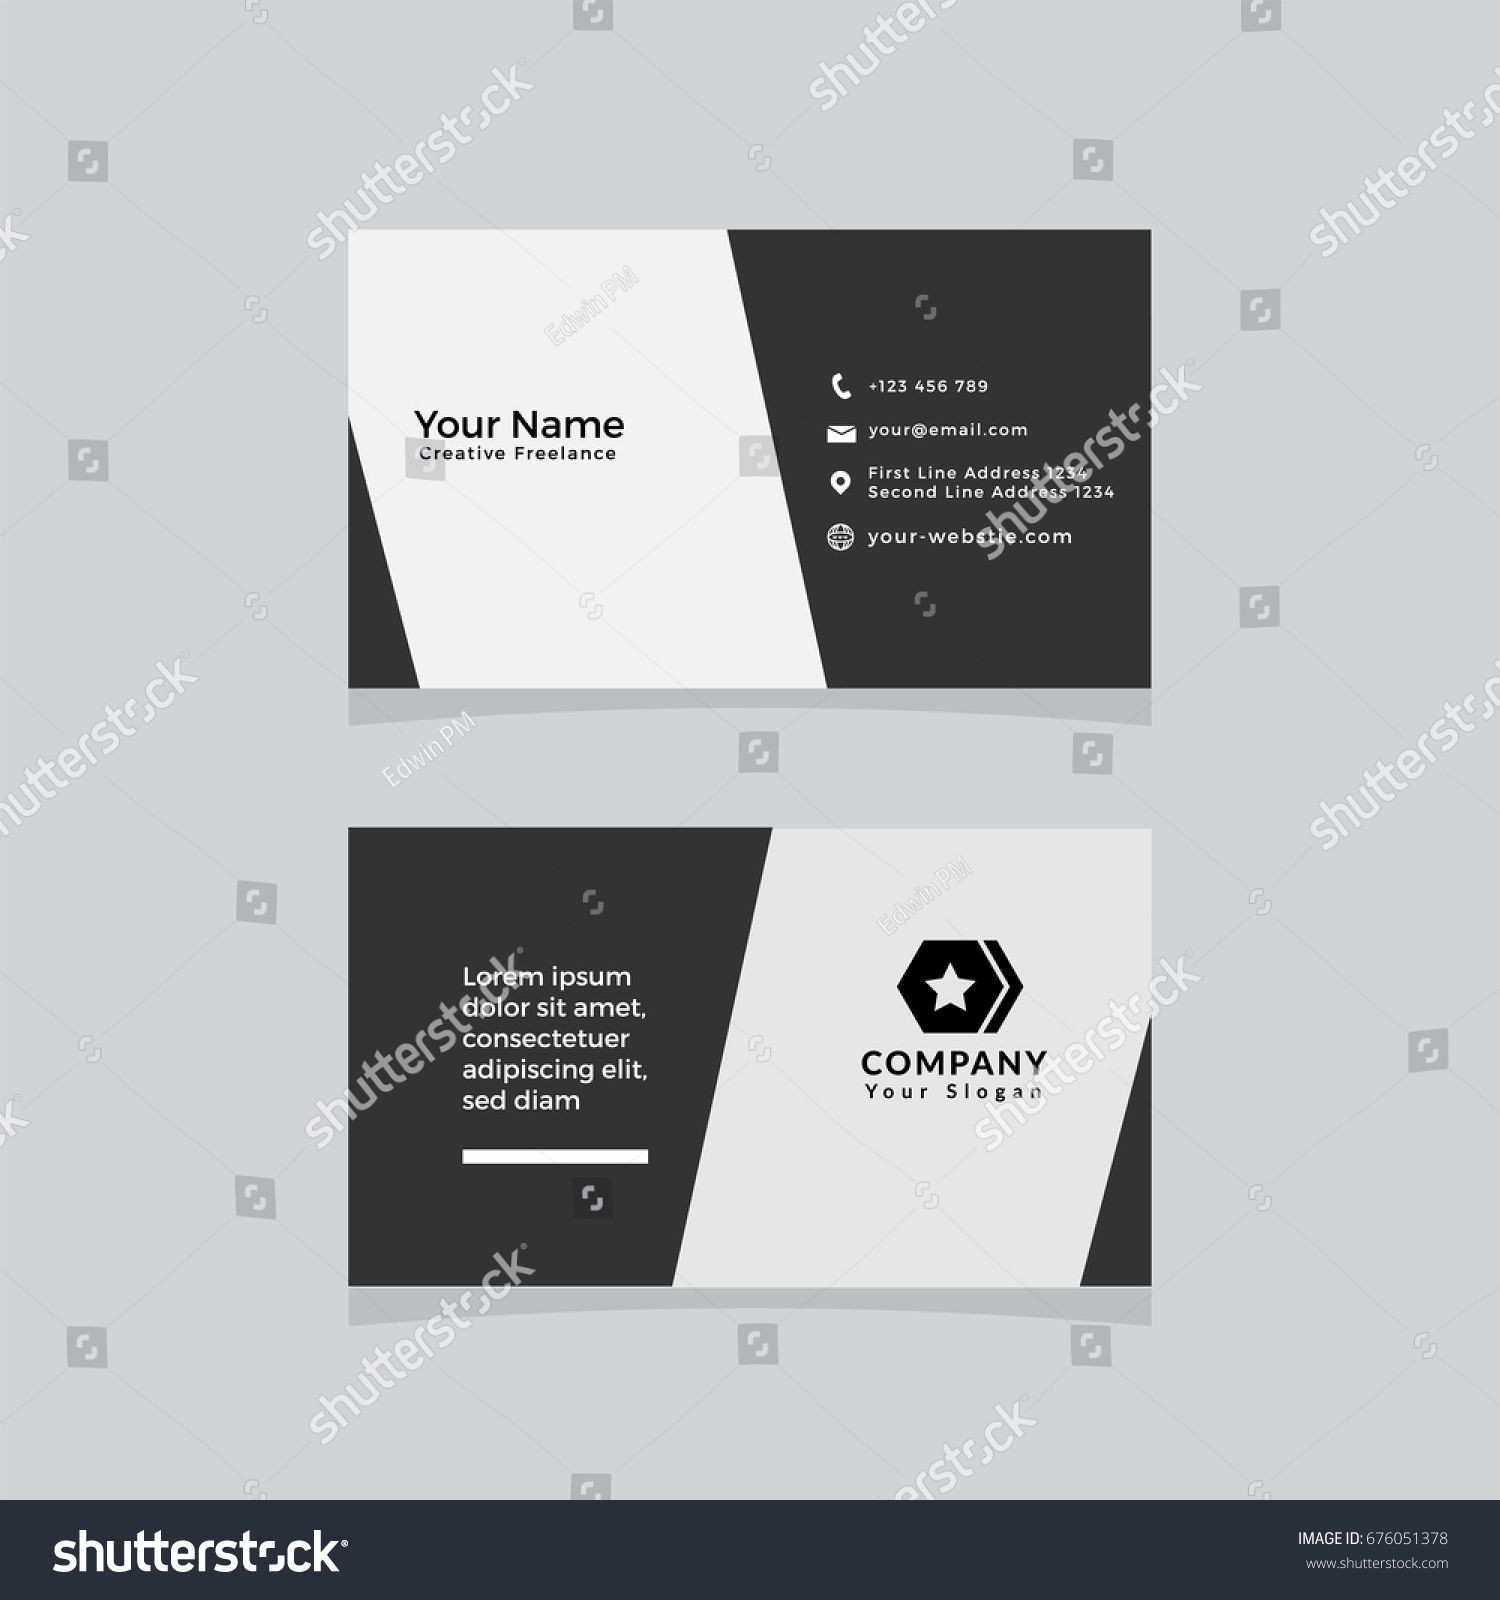 11 Creative Adobe Illustrator Double Sided Business Card Intended For Adobe Illustrator Card Template